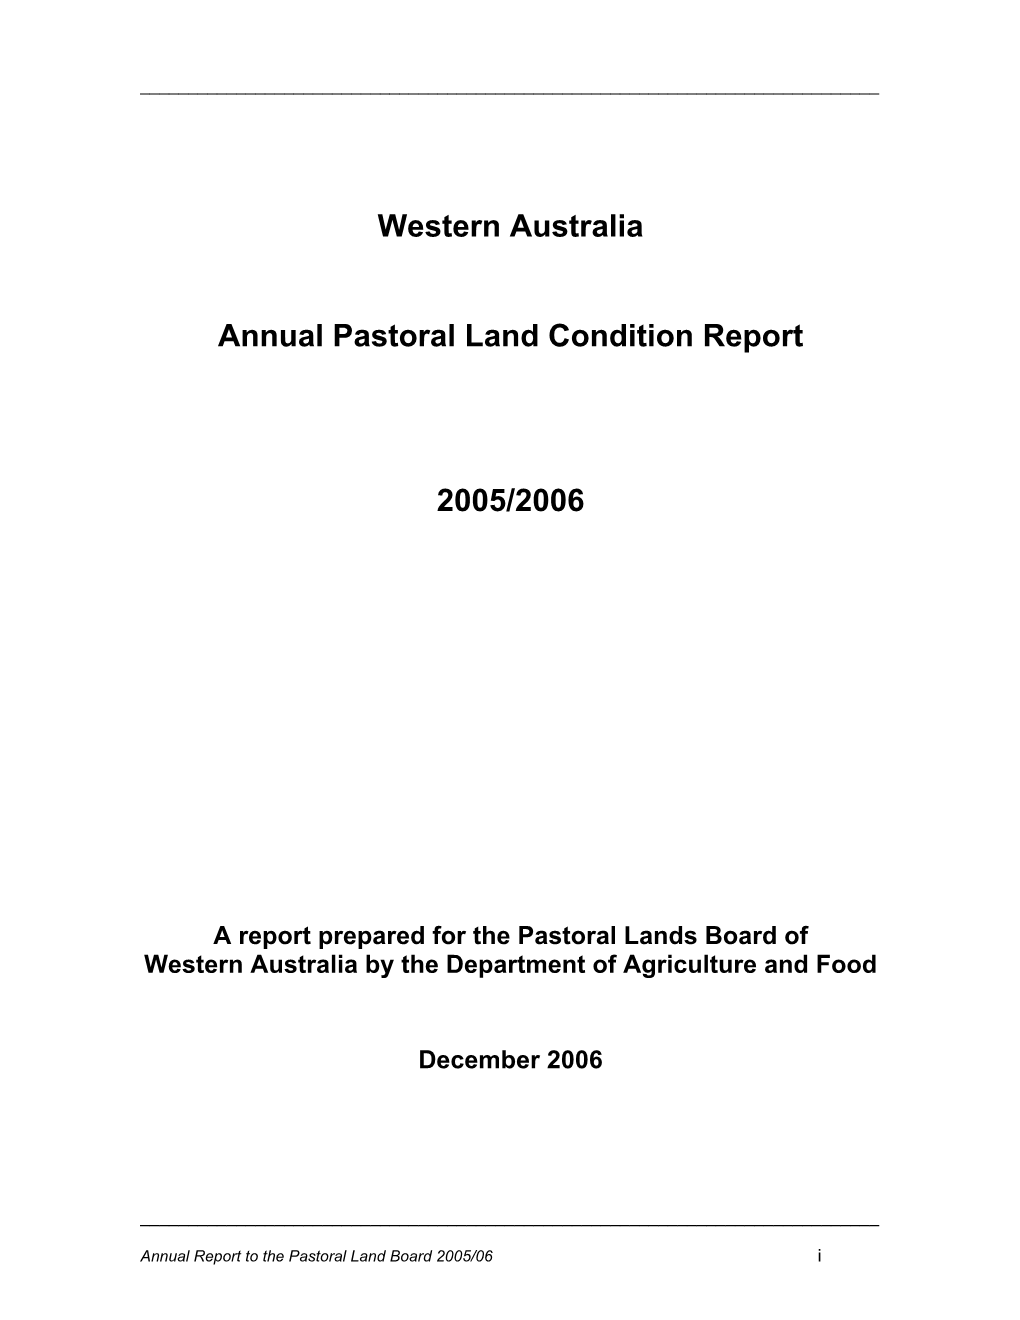 Annual Pastoral Land Condition Report, Western Australia 2005–06